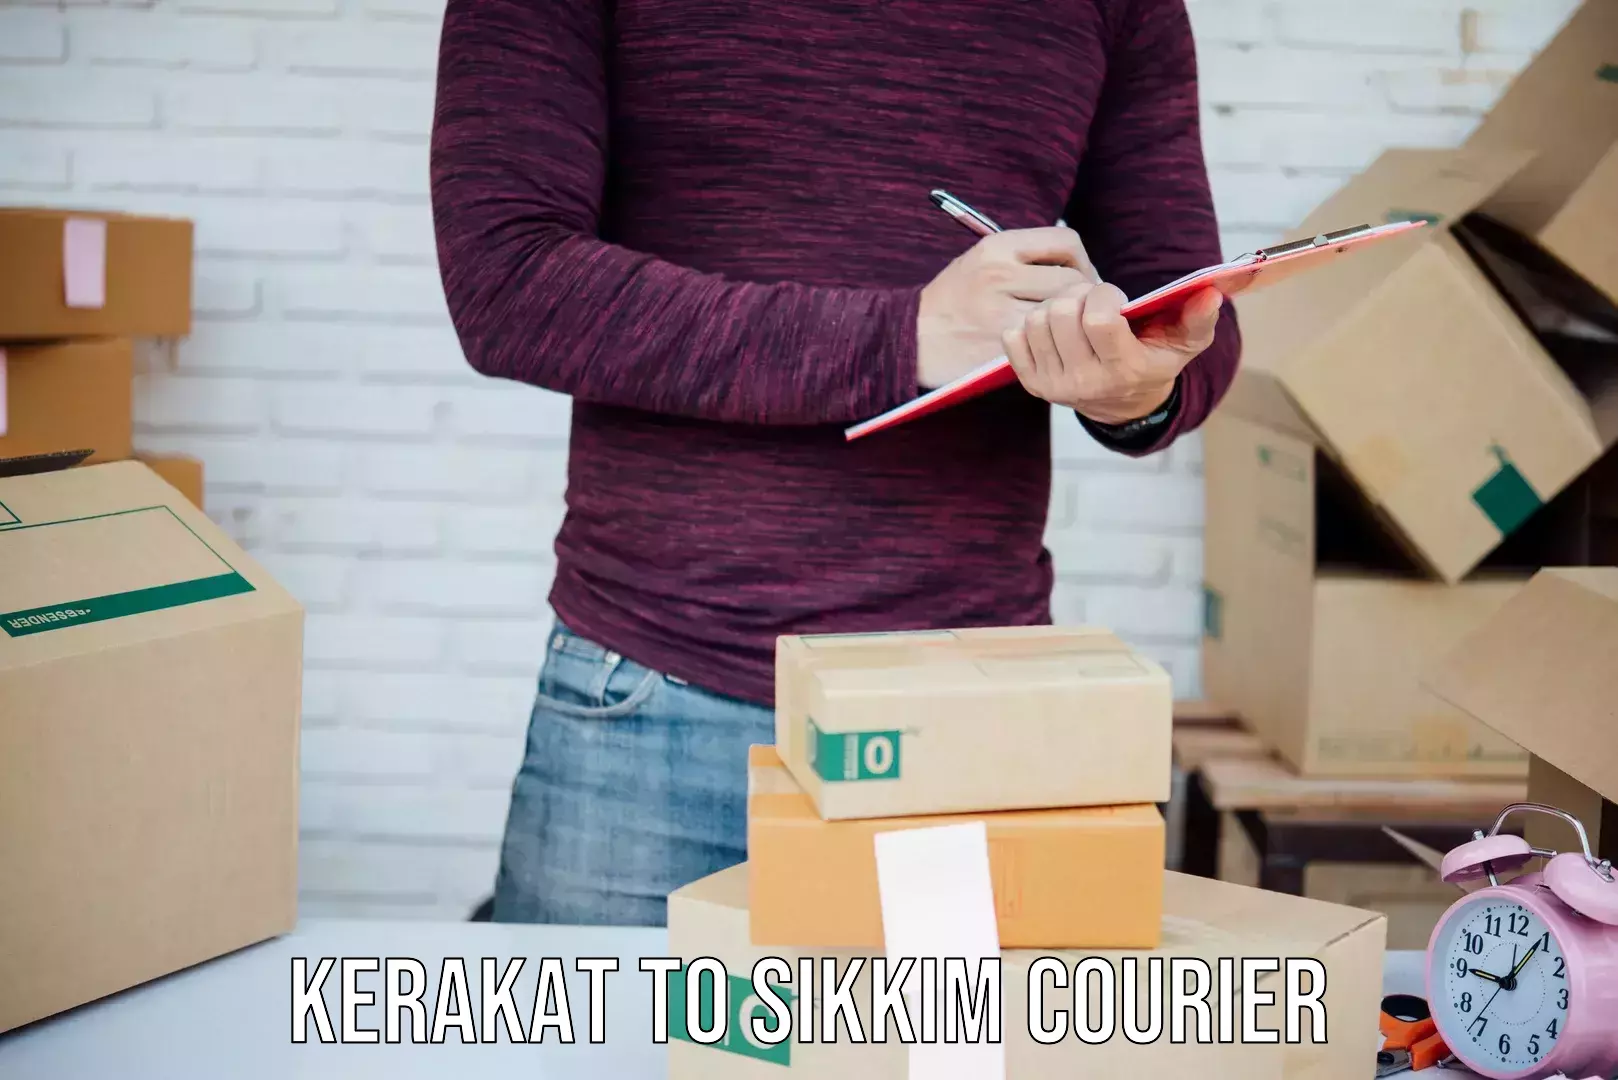 24/7 courier service in Kerakat to Sikkim